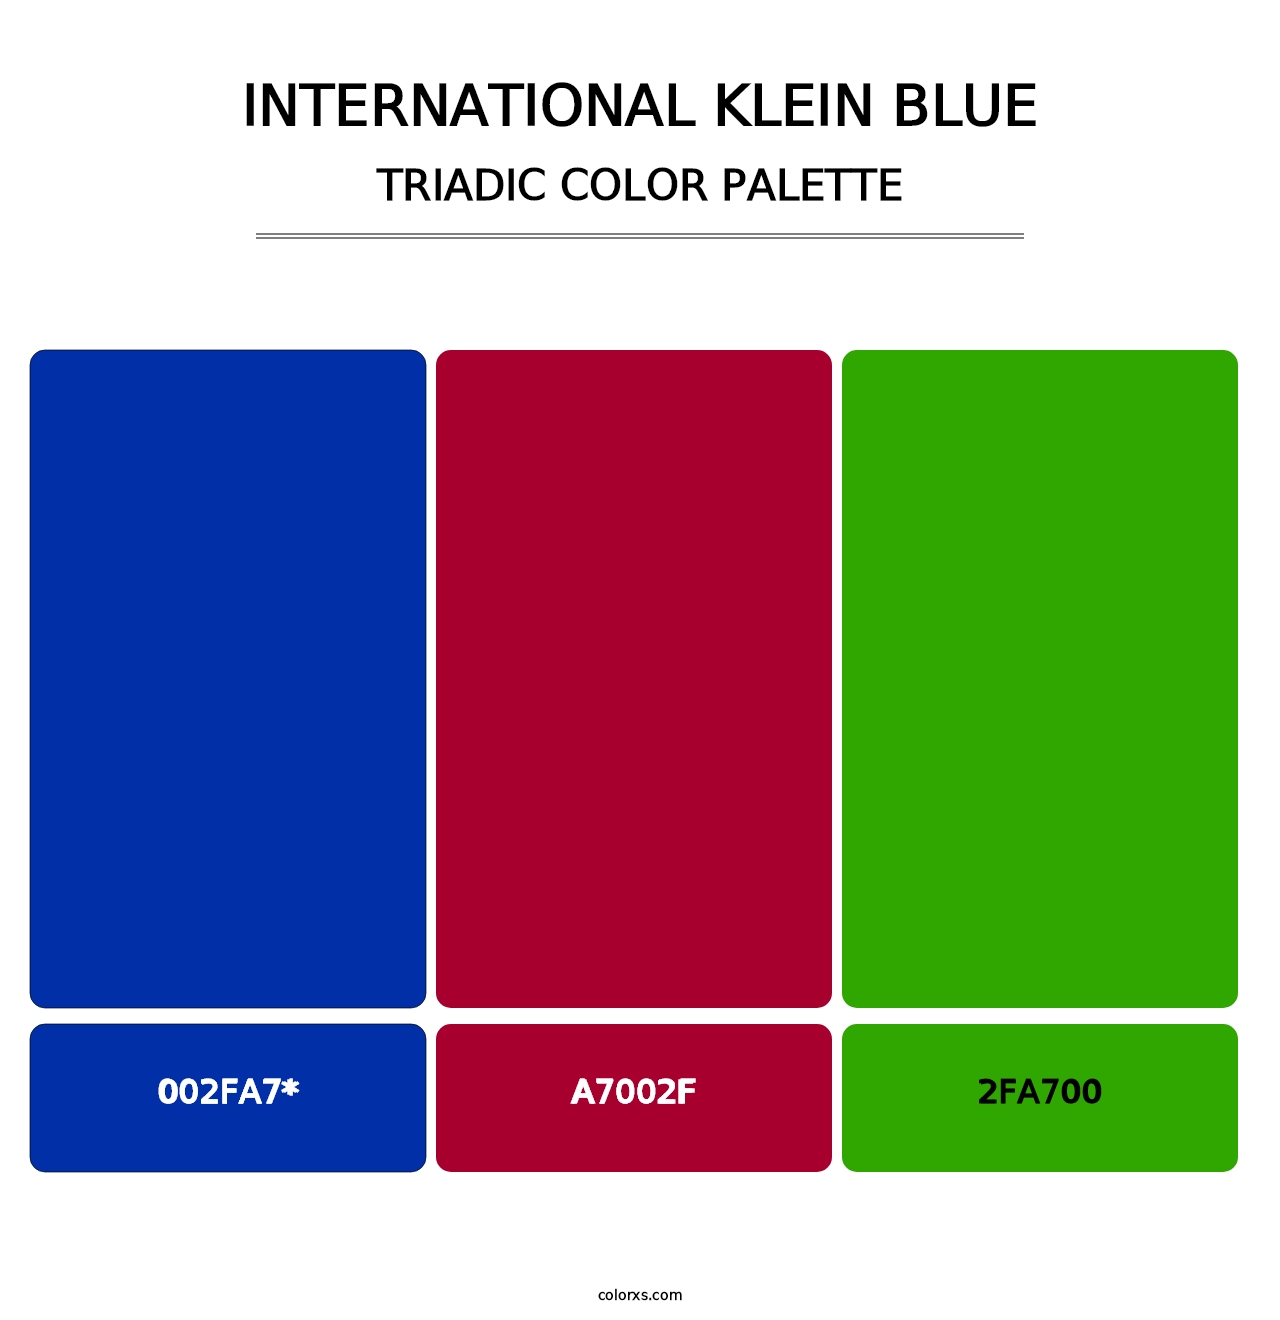 International Klein Blue - Triadic Color Palette